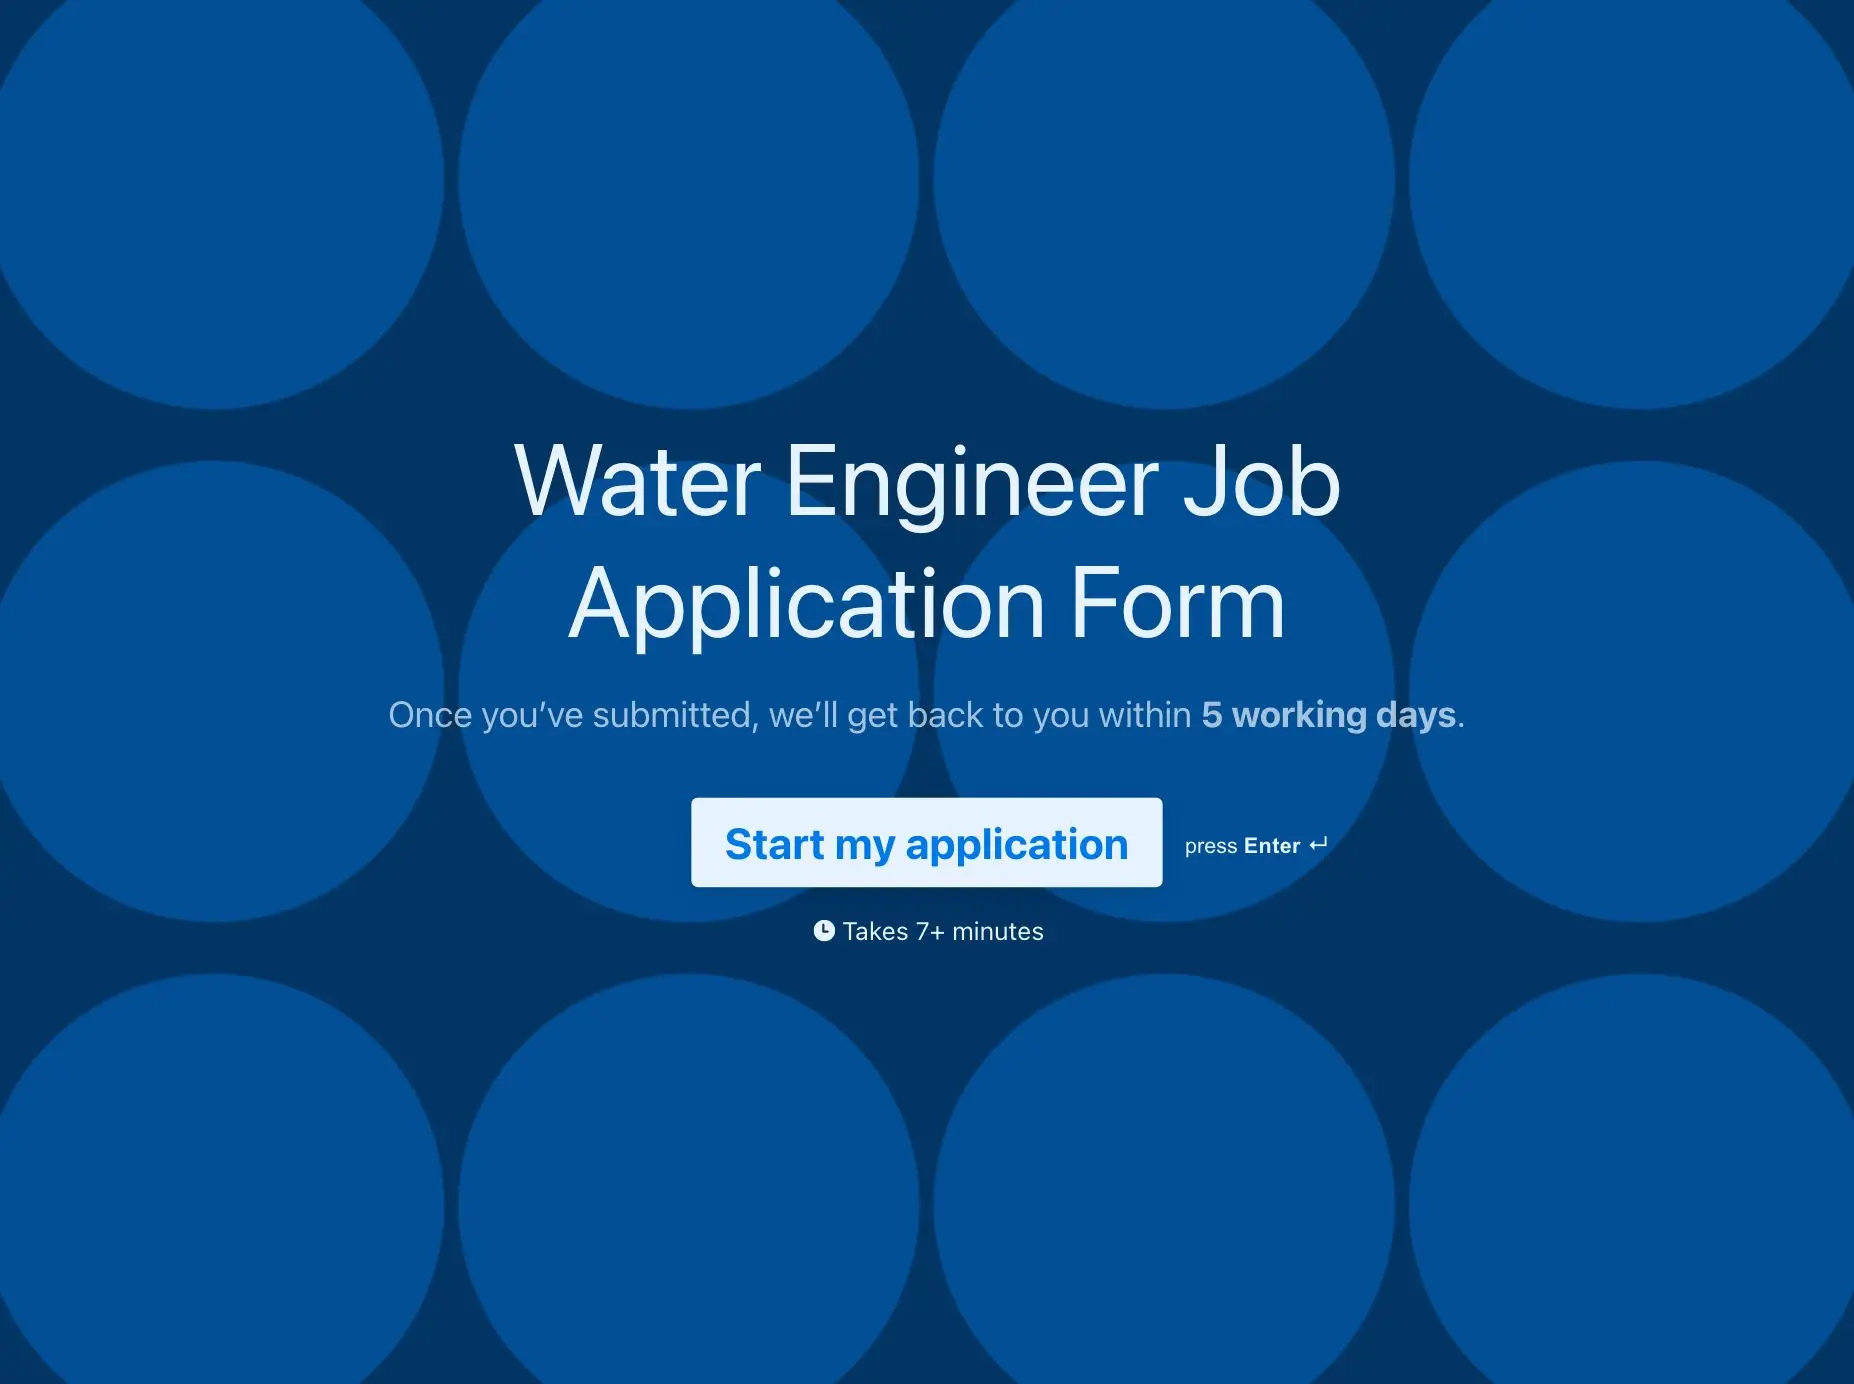 Water Engineer Job Application Form Template Hero